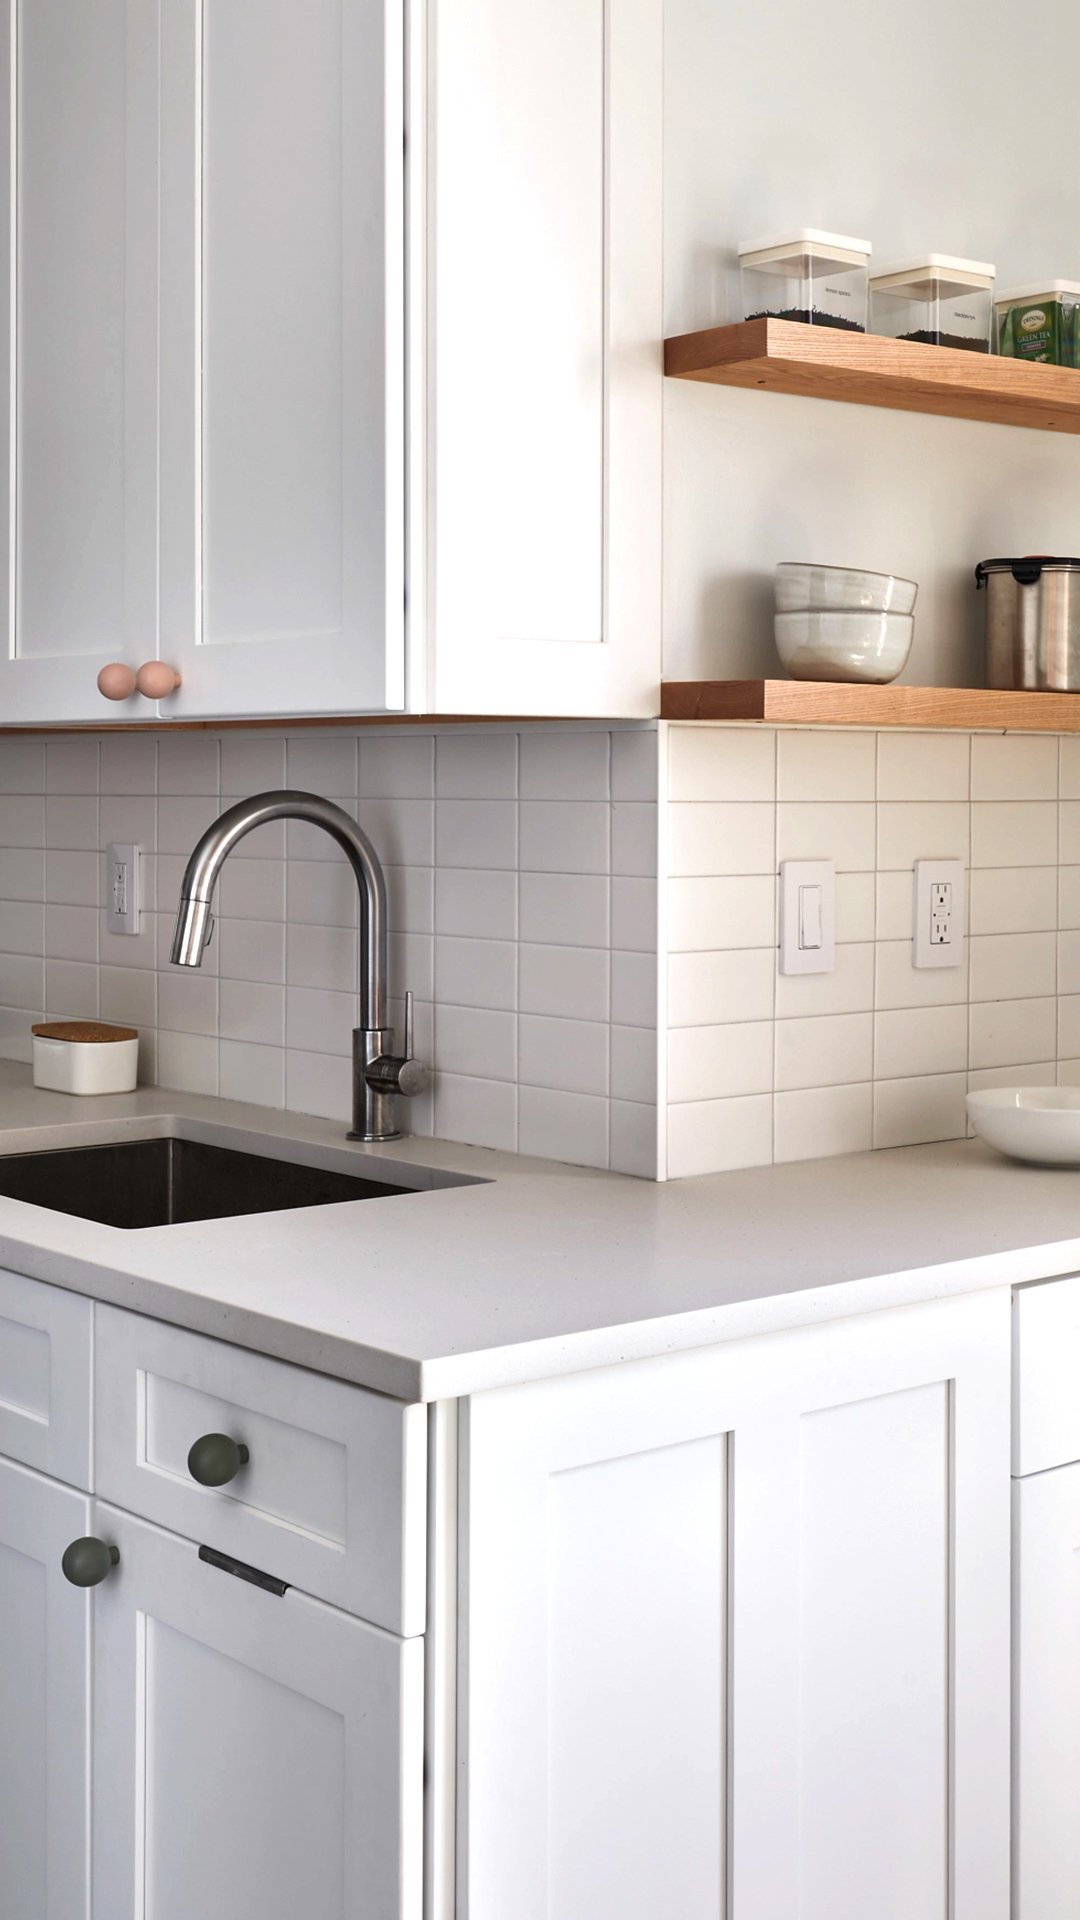 21 Tile Backsplash Behind a Stove Ideas to Add Color and Style  Kitchen  backsplash designs, Kitchen backsplash, Kitchen niche